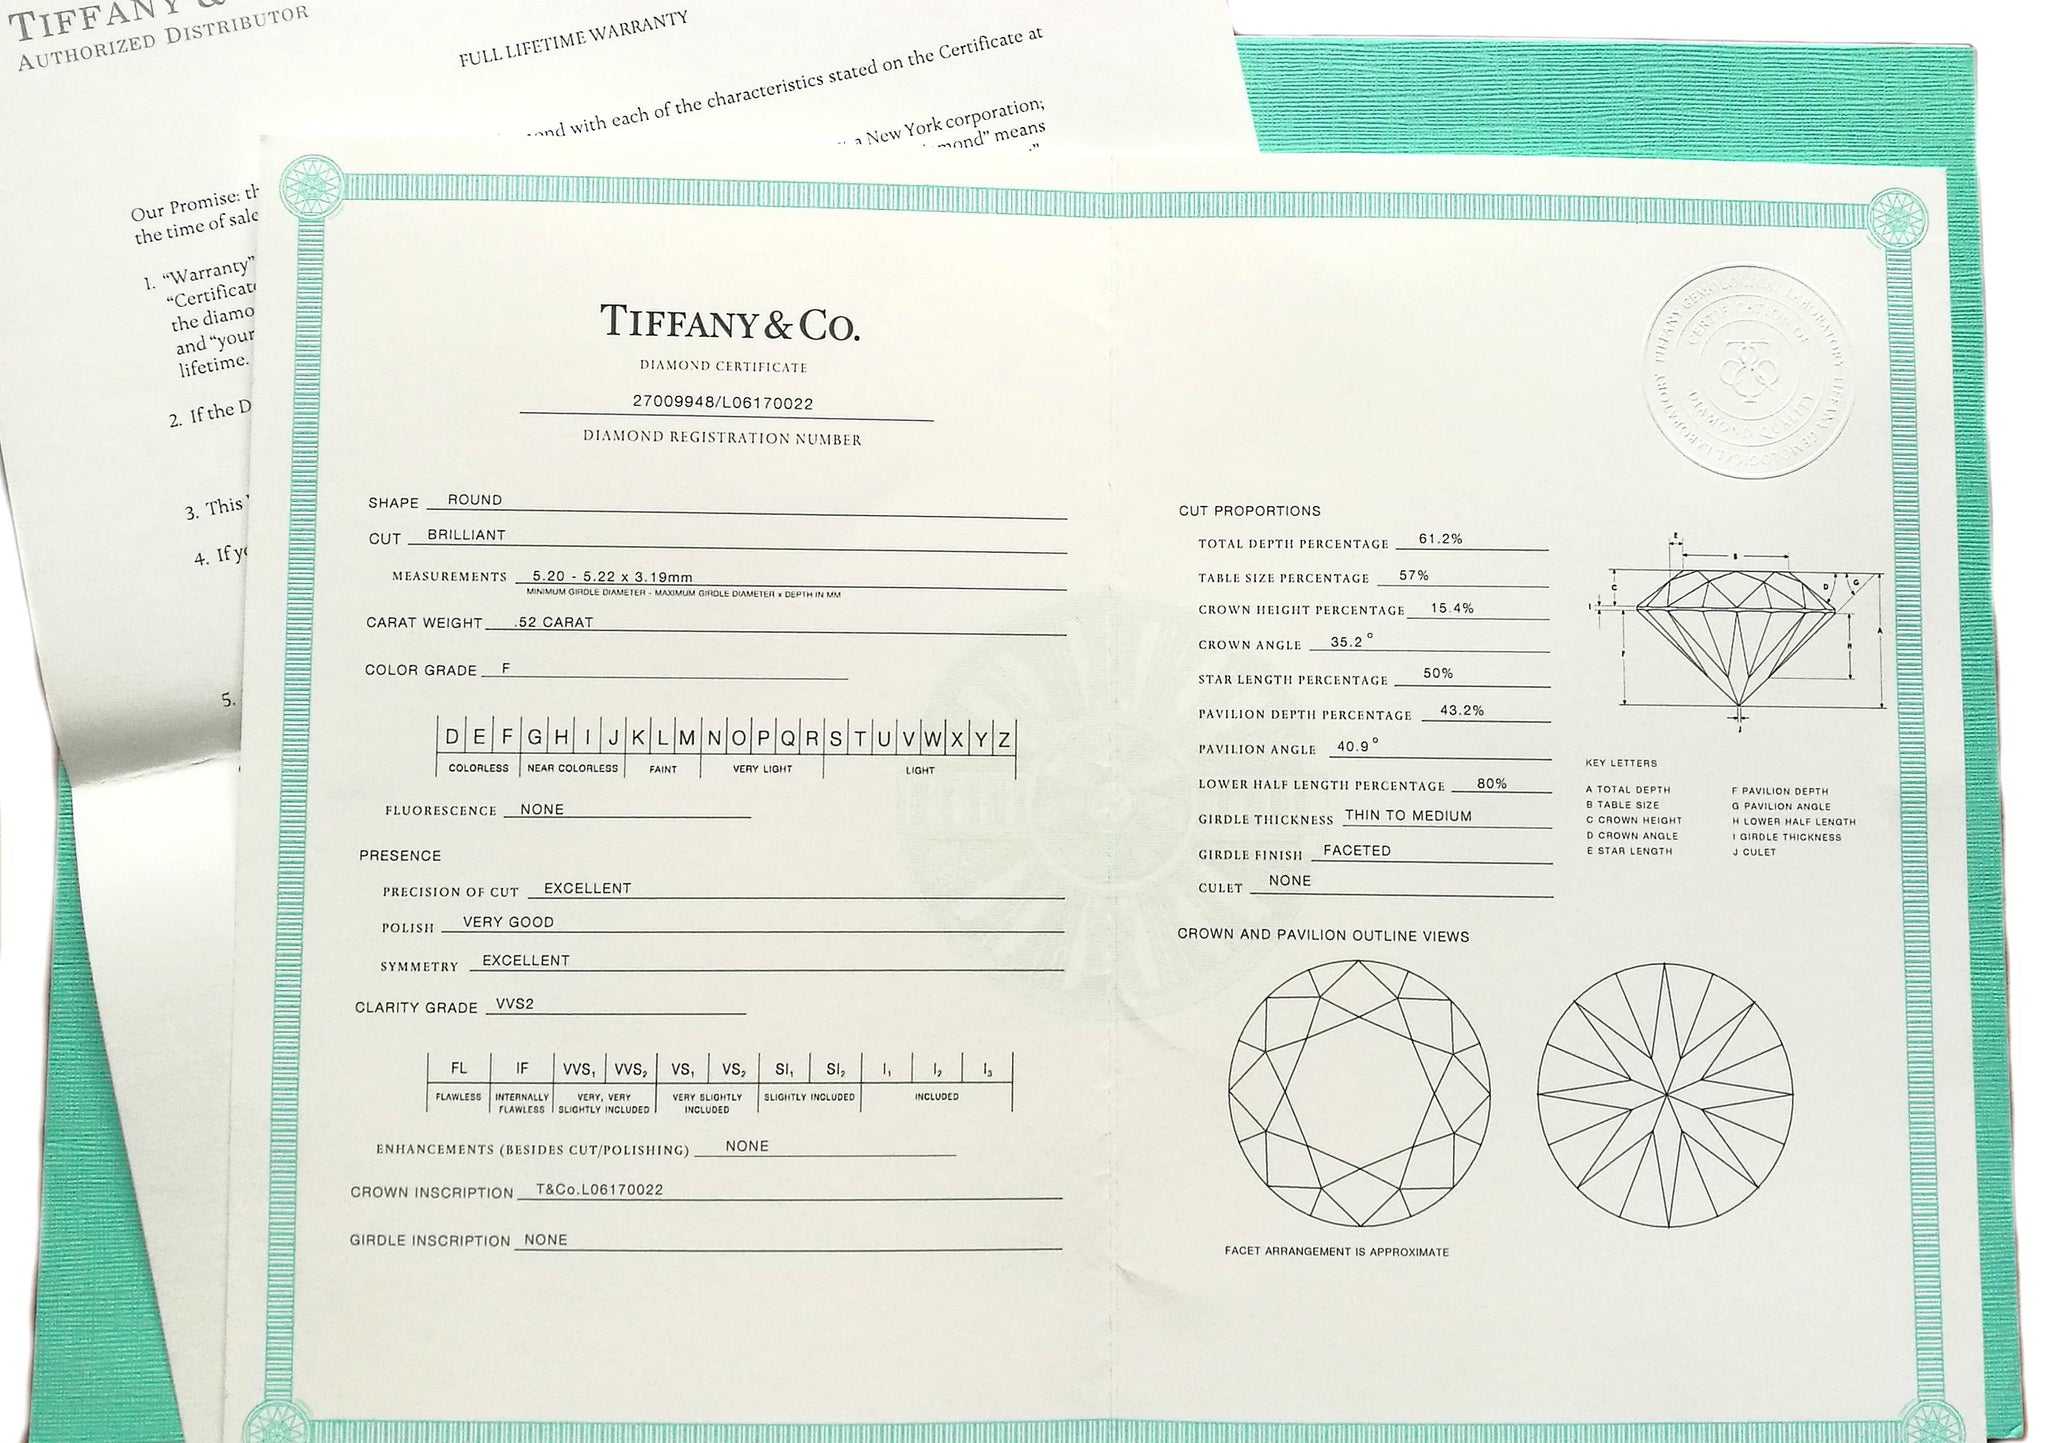 tiffany and co diamond certificate